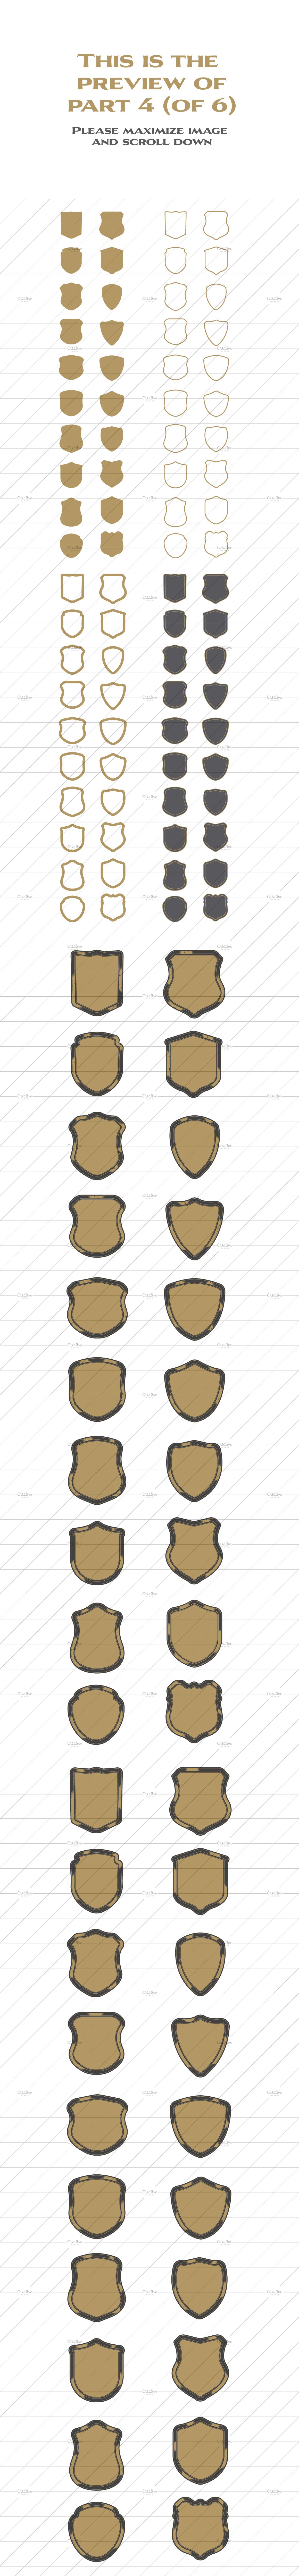 1080 shields shapes vector set base shapes preview part 4 111